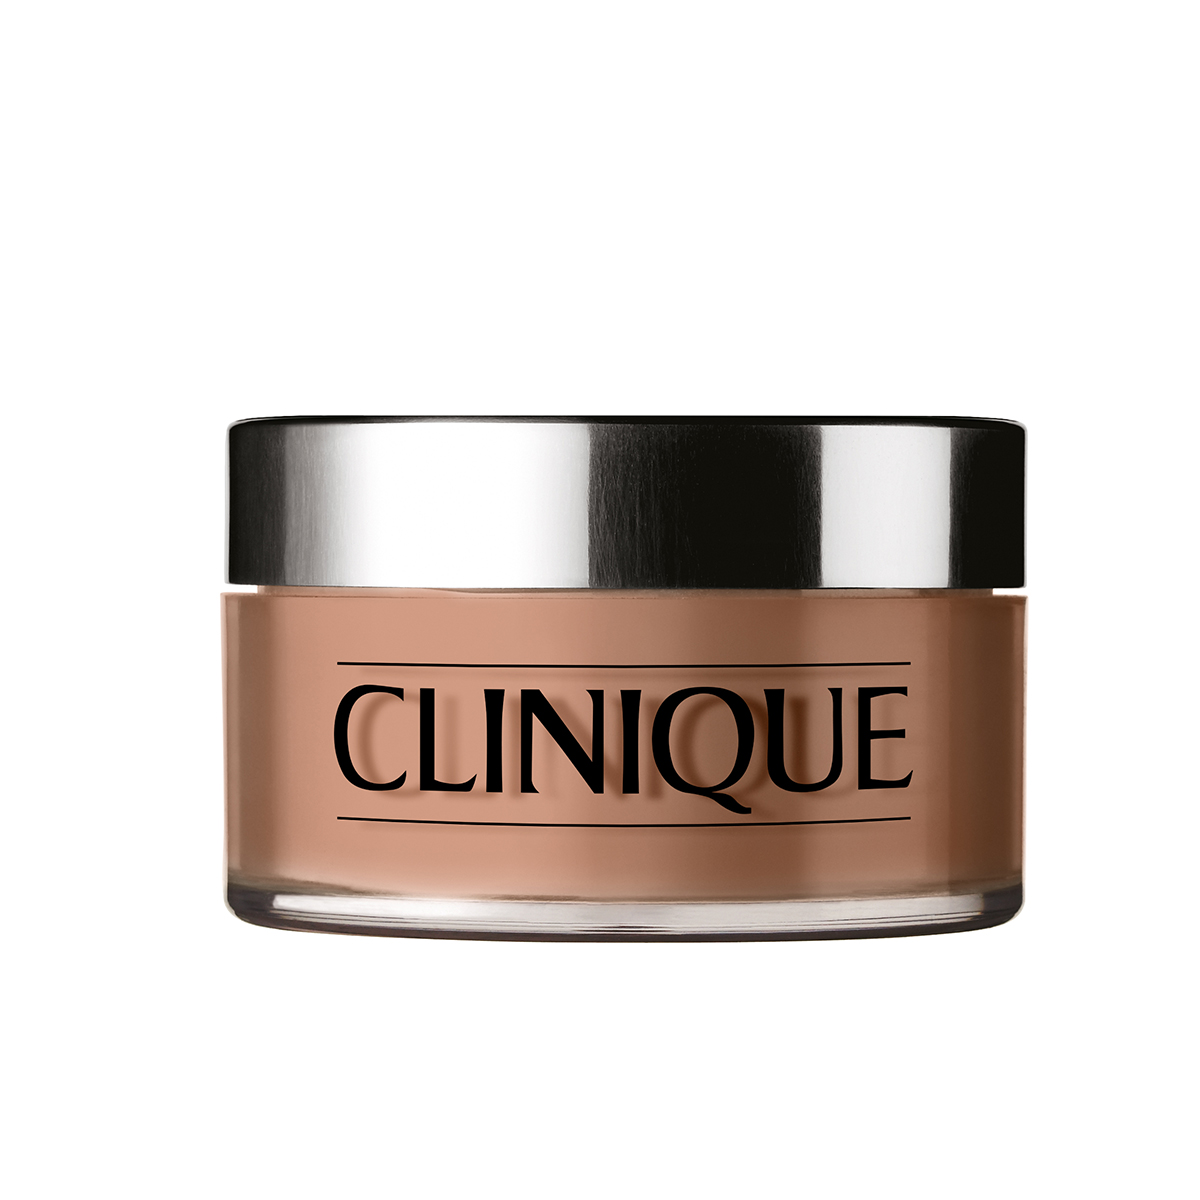 Clinique Blended Face Powder